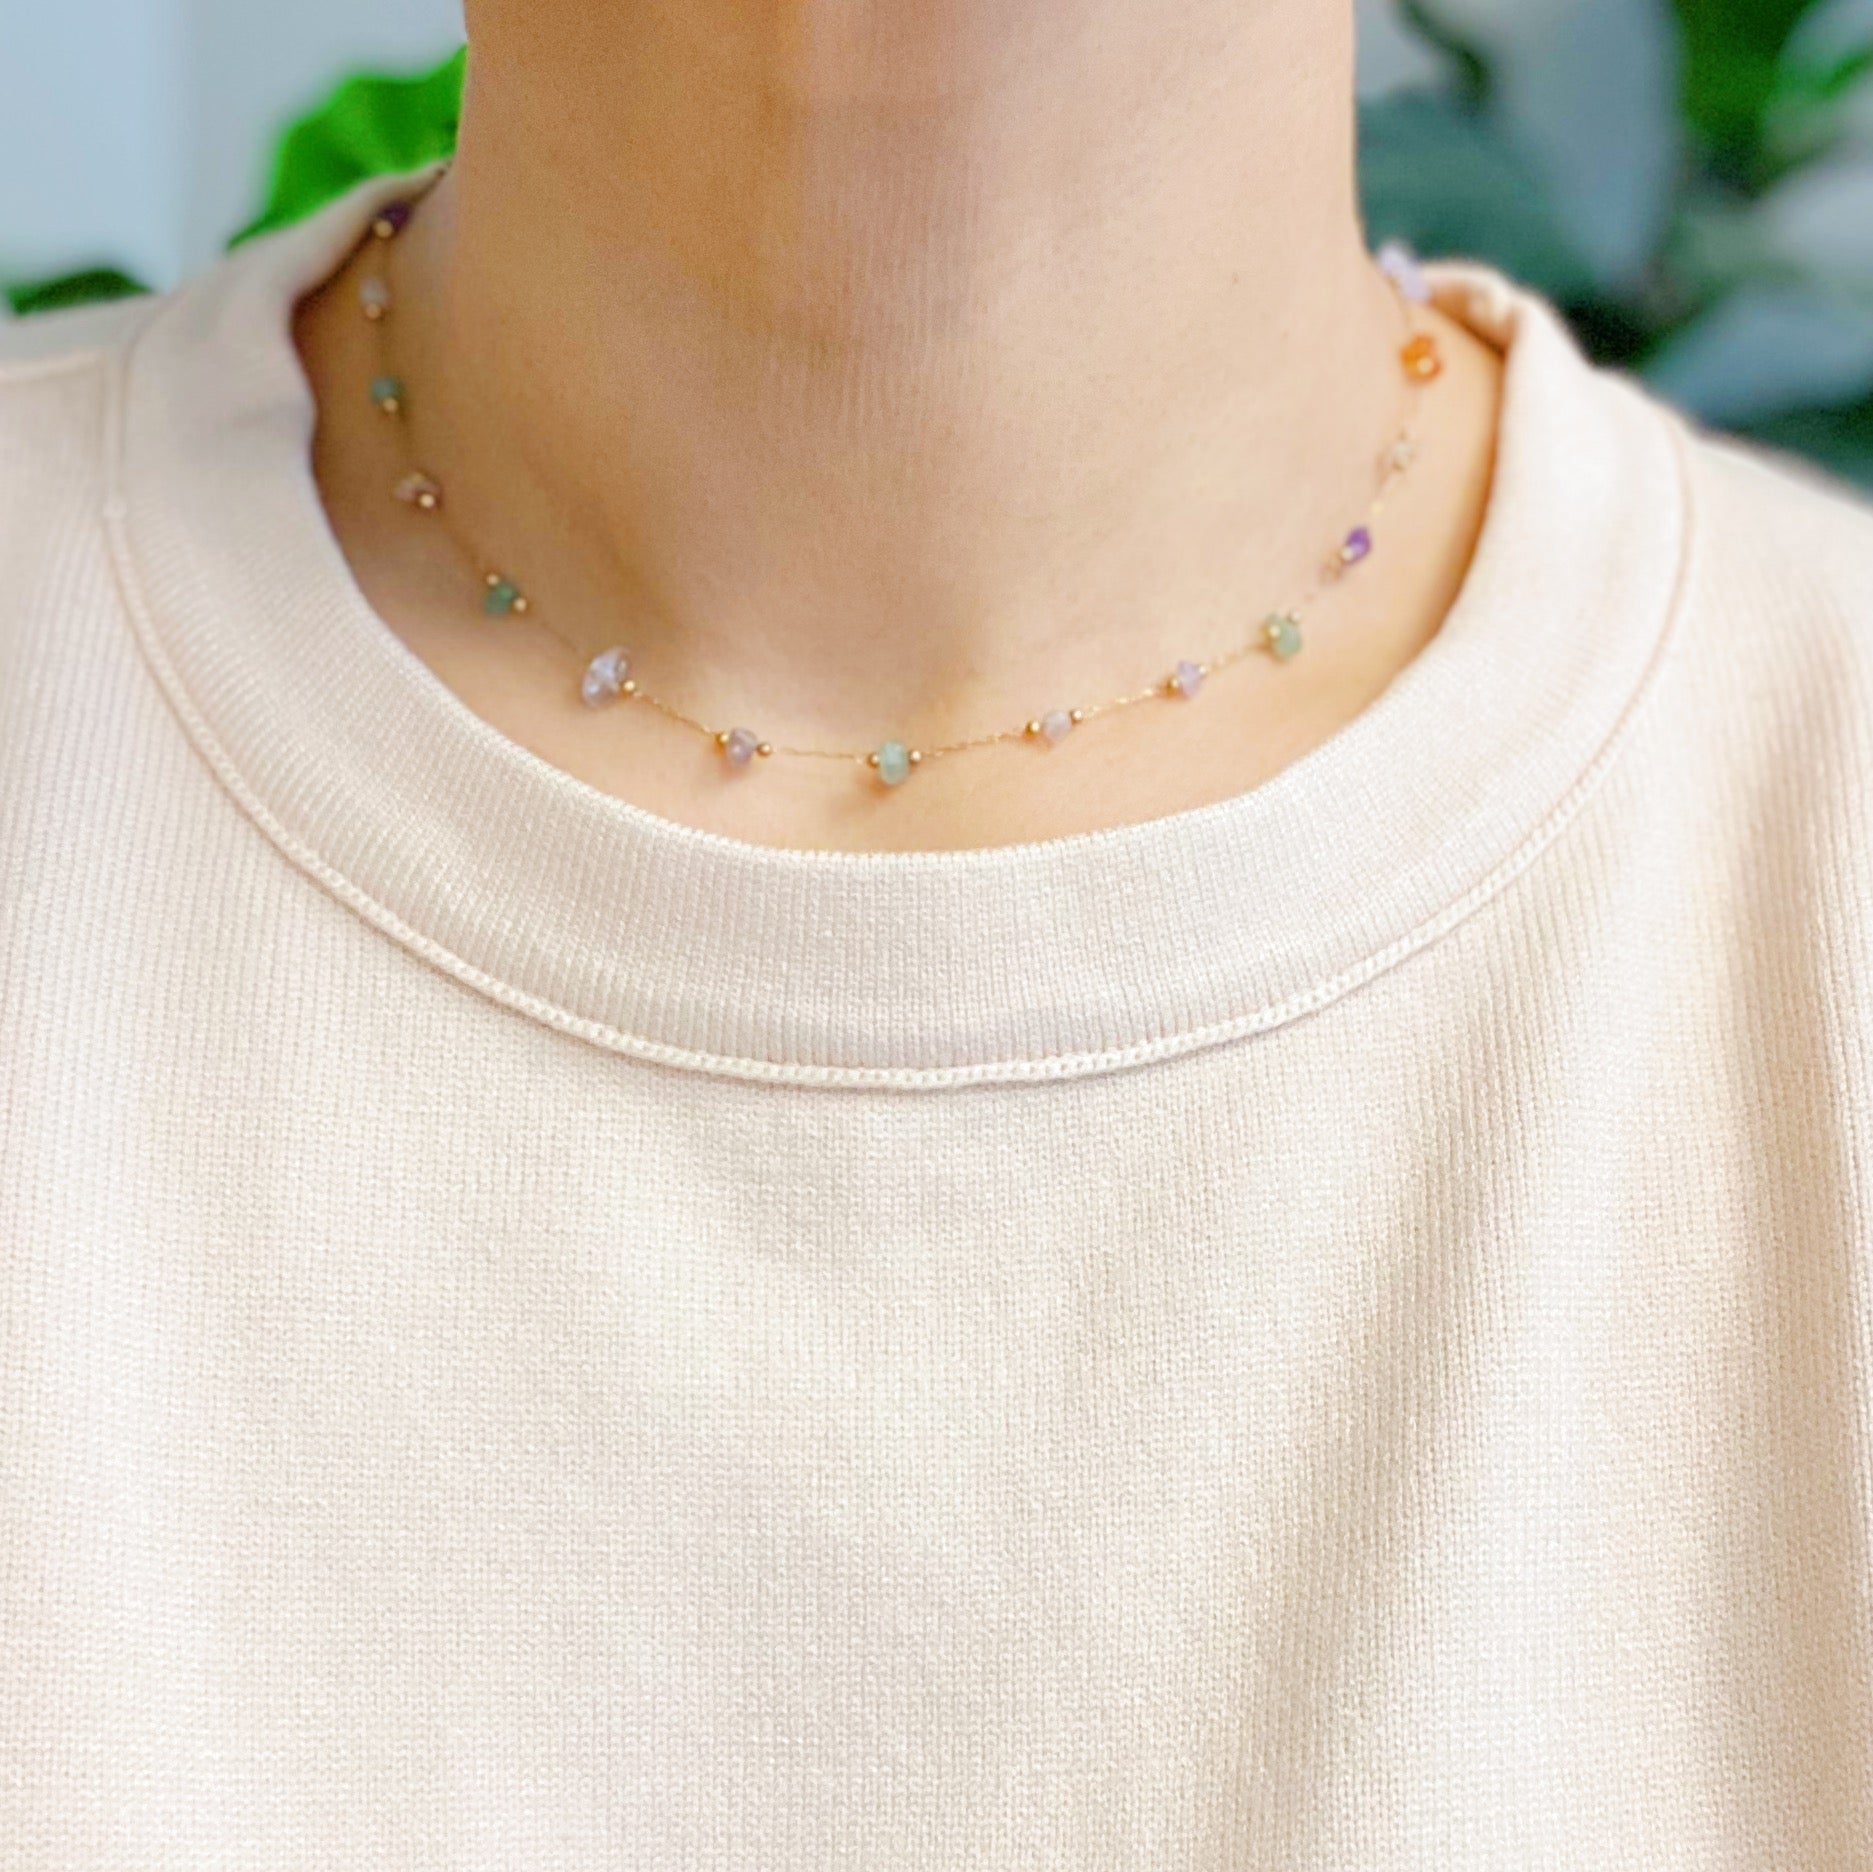 Precious Pebble Stone Necklace - The Kindness Cause